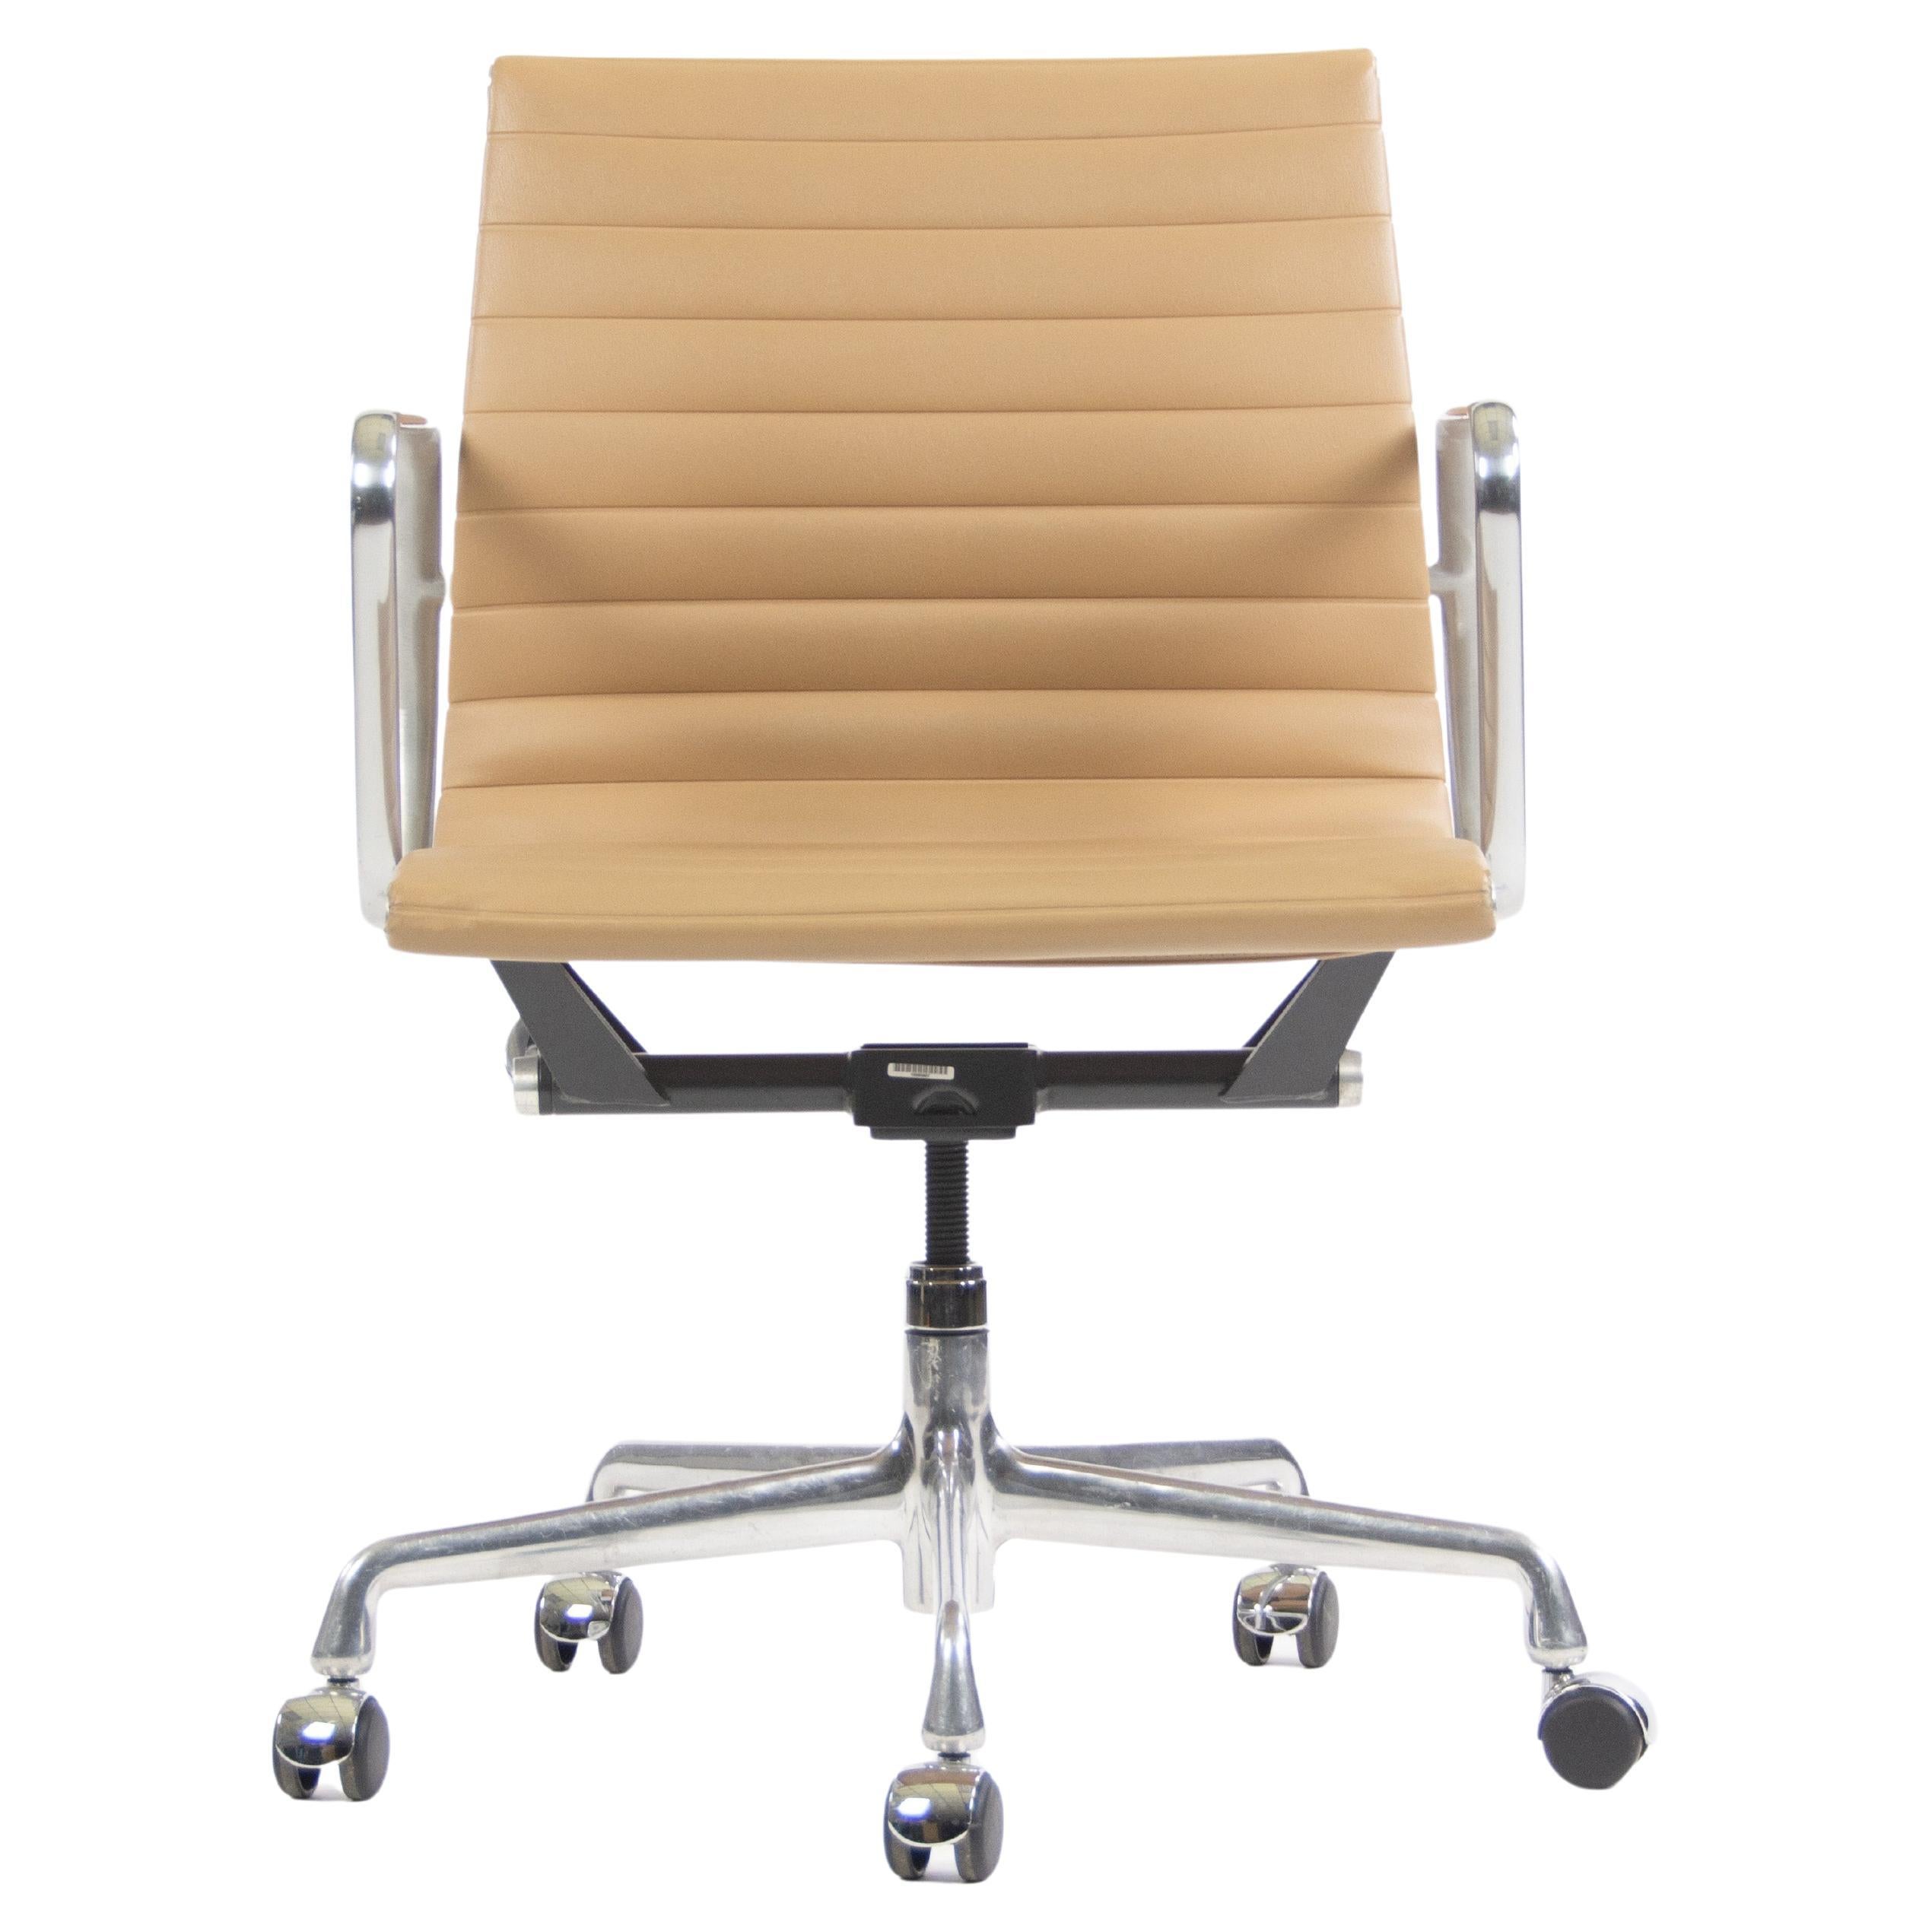 2008 Herman Miller Aluminum Group Management Desk Chair in Tan Naugahyde (chaise de bureau en aluminium Eames)